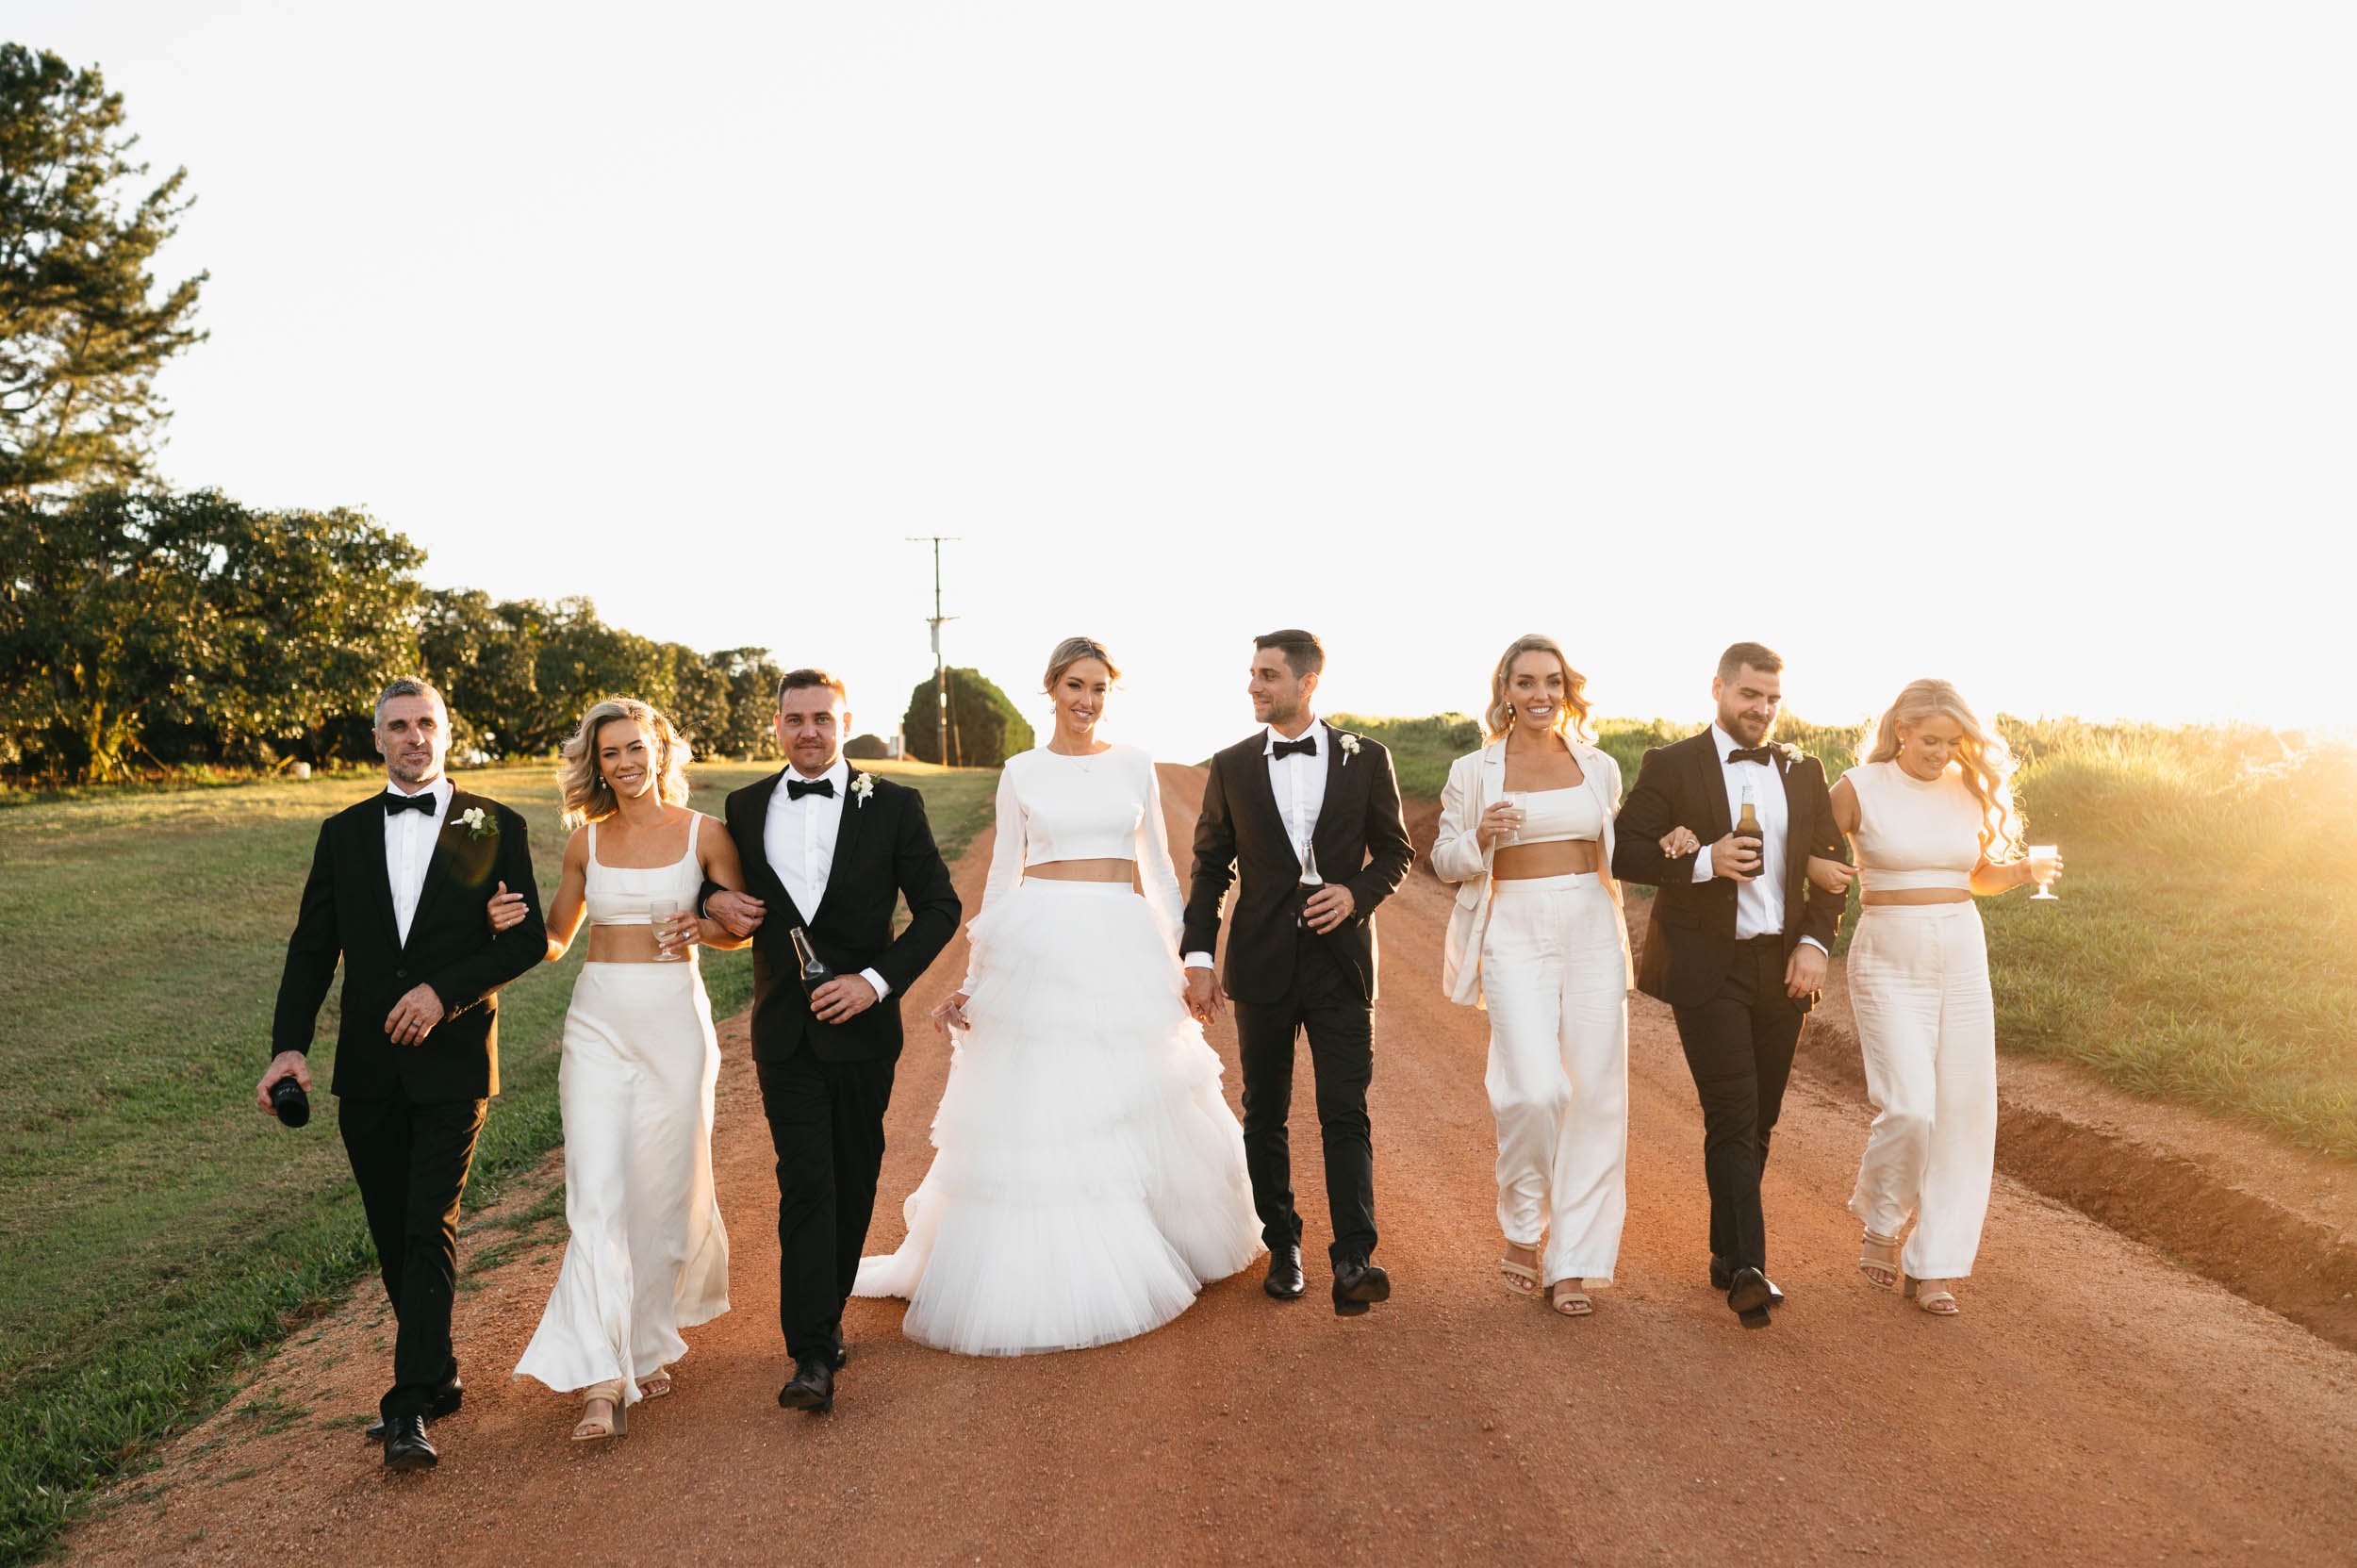 The Raw Photographer - Cairns Wedding Photographer - Mareeba Tablelands - Queensland photography - Kyha dress - luxury-52.jpg